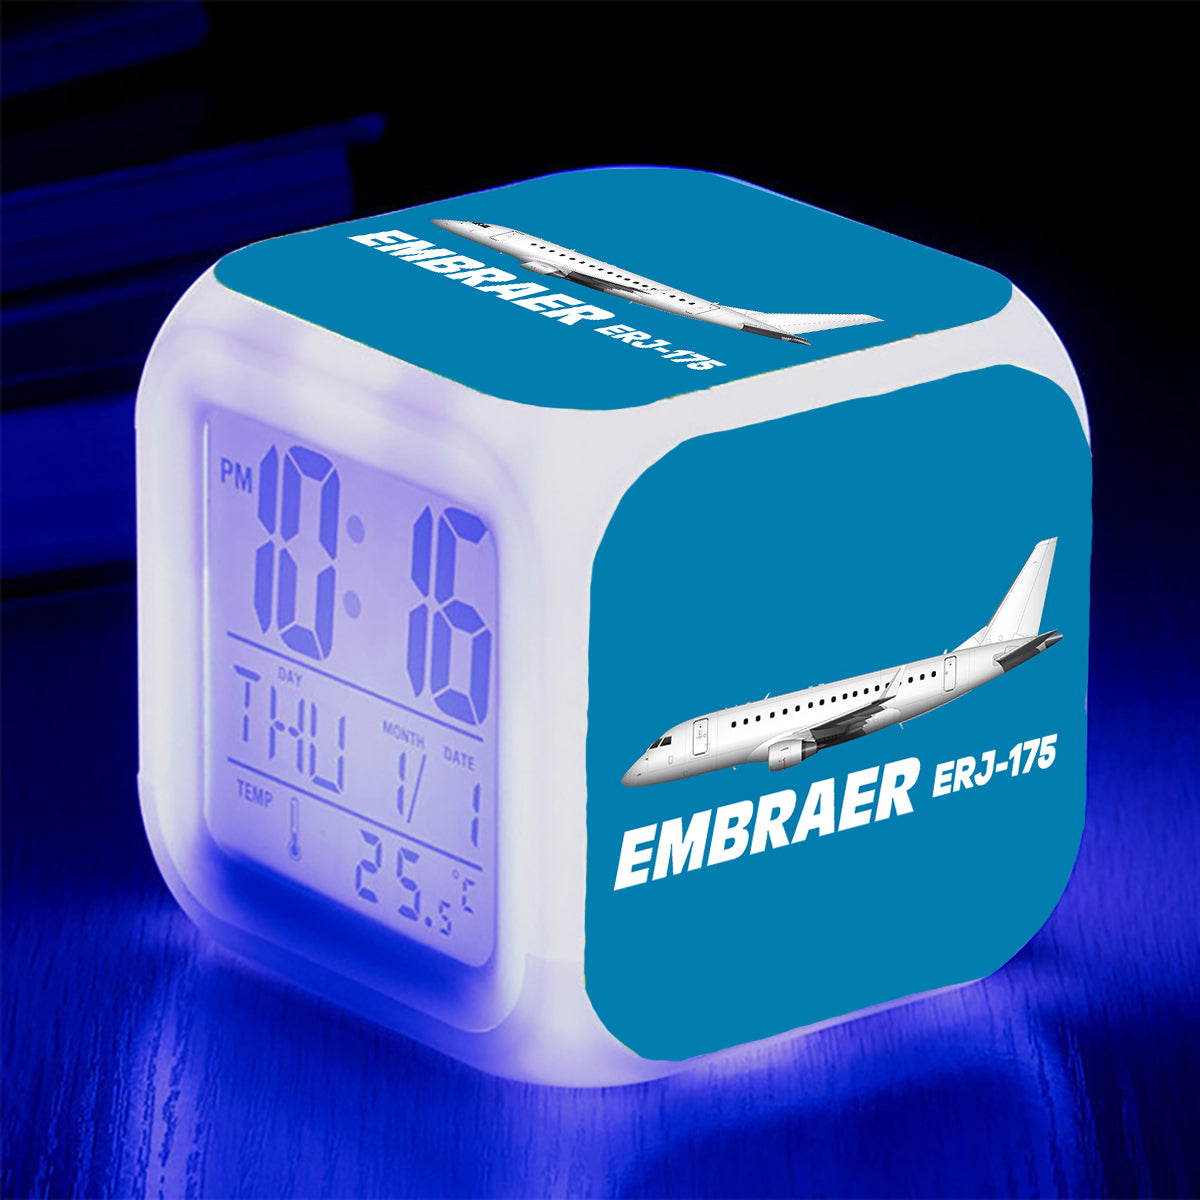 The Embraer ERJ-175 Designed "7 Colour" Digital Alarm Clock